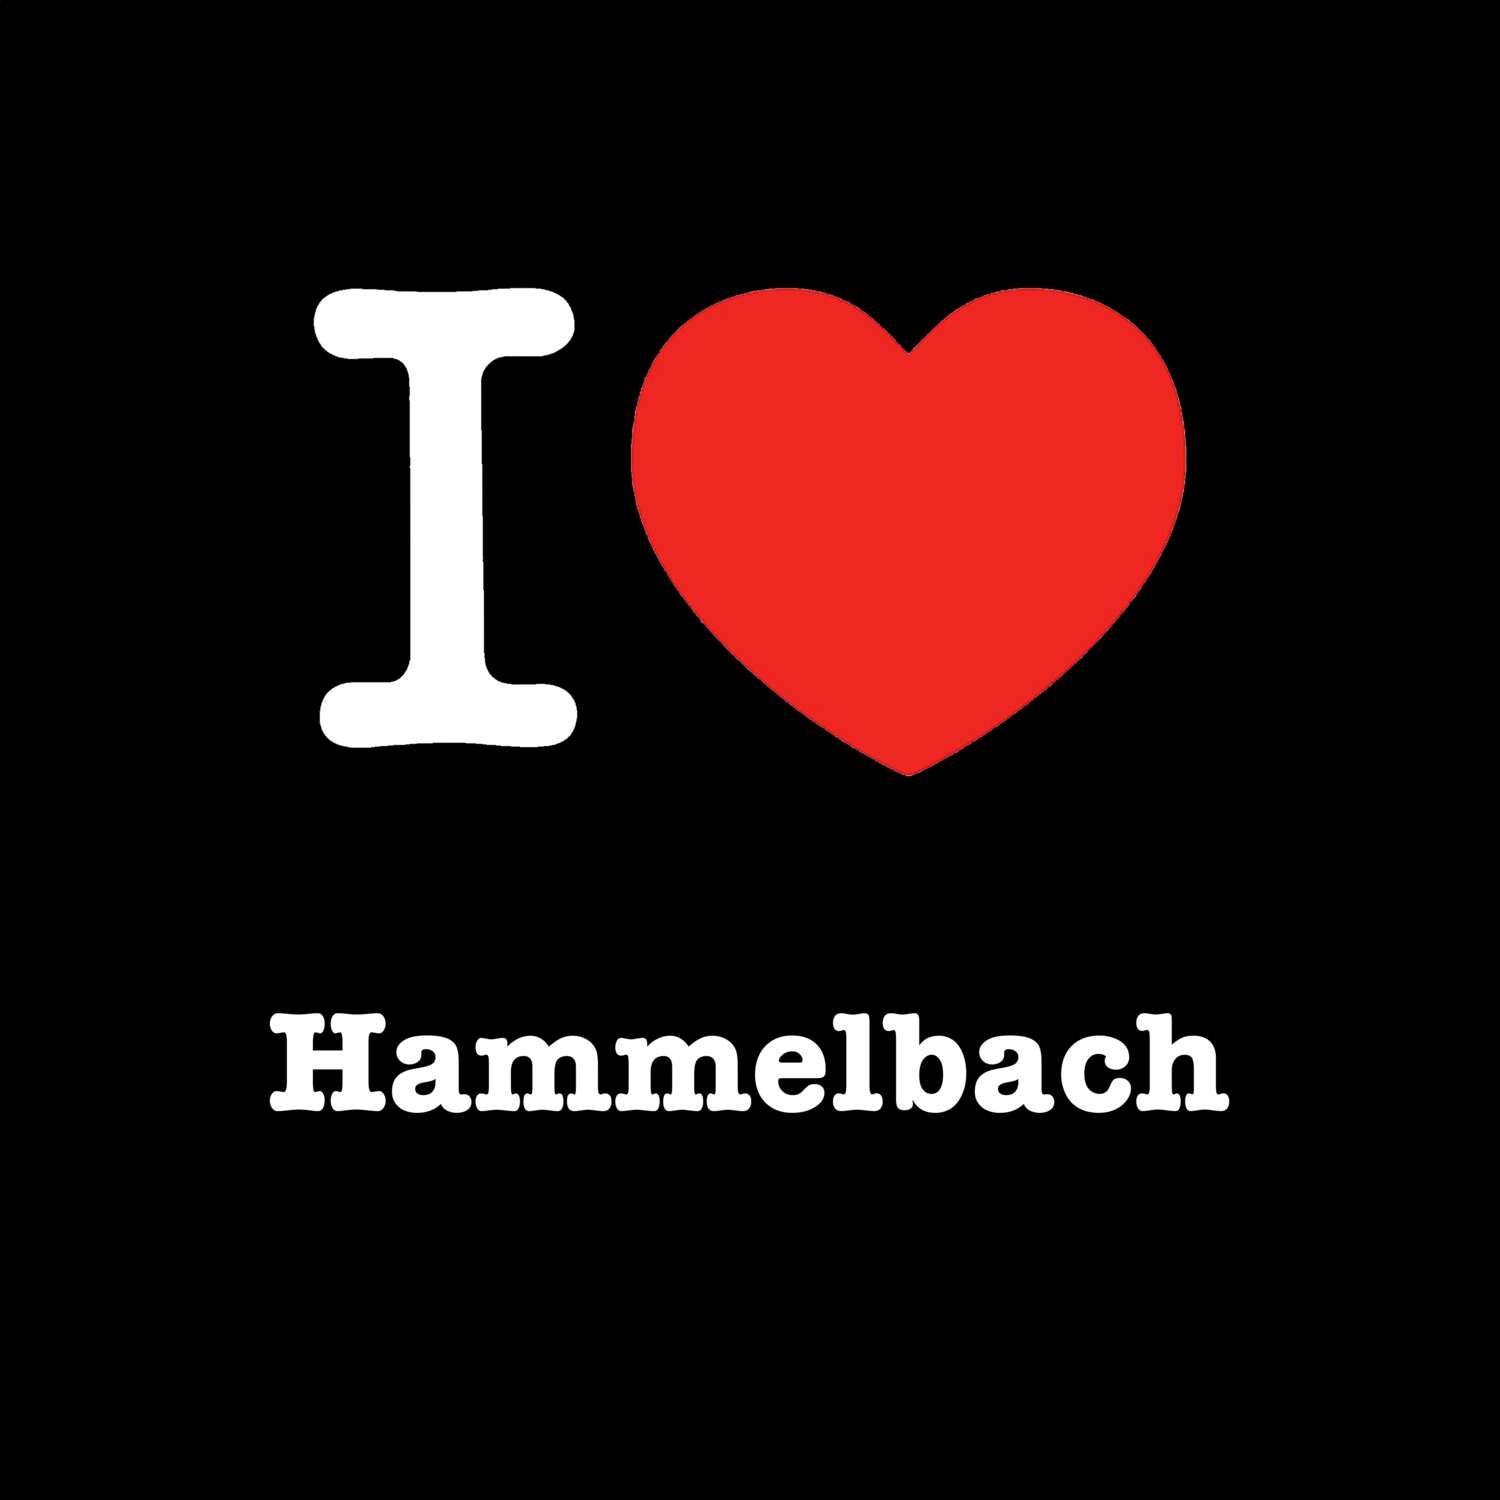 Hammelbach T-Shirt »I love«